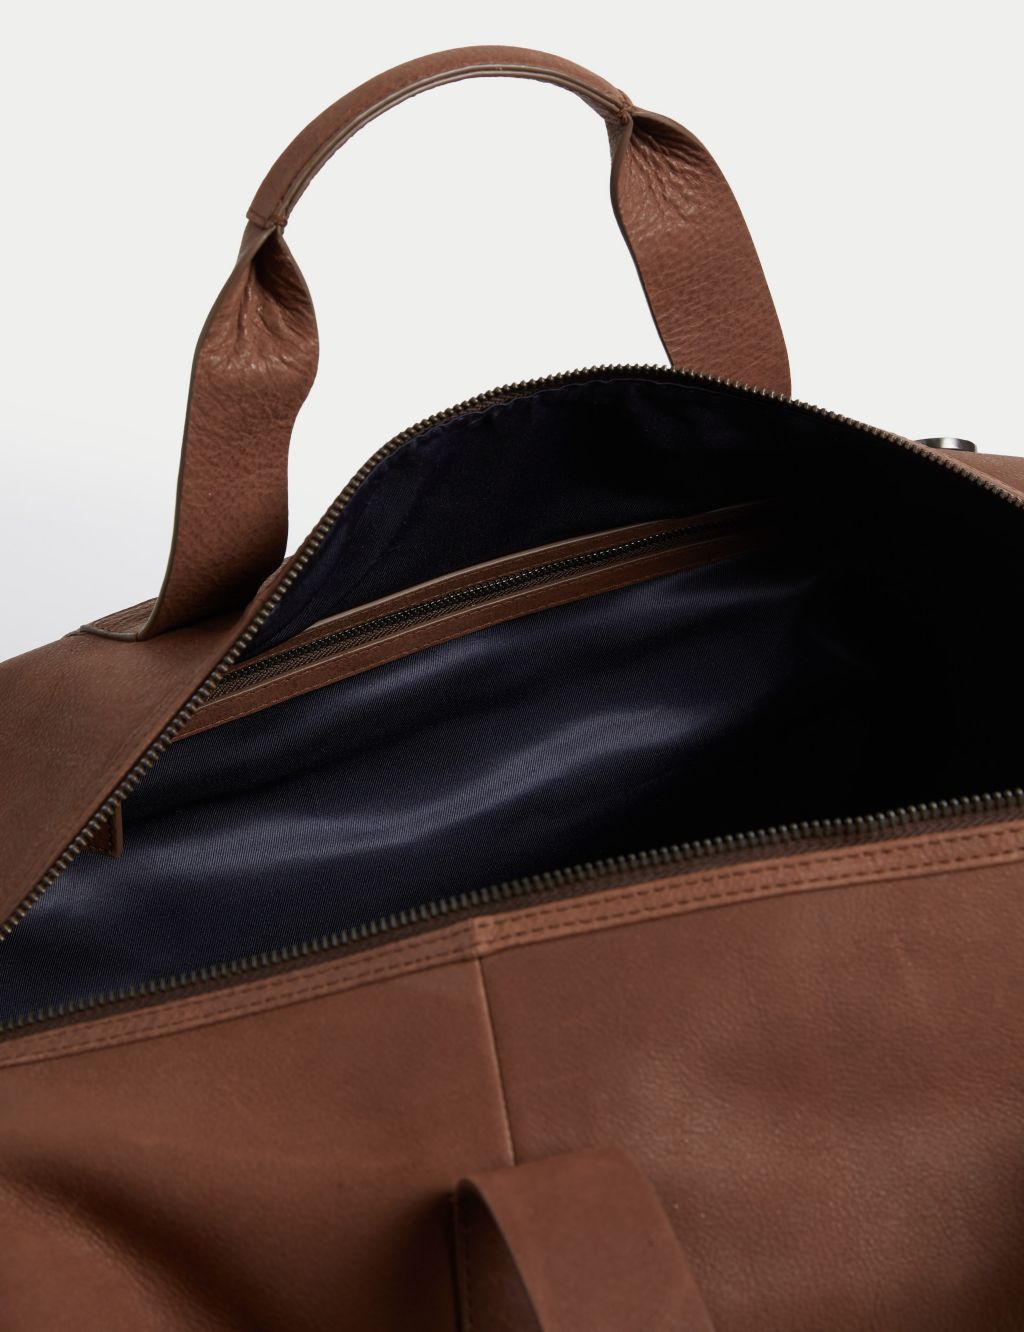 Premium Leather Weekend Bag image 4